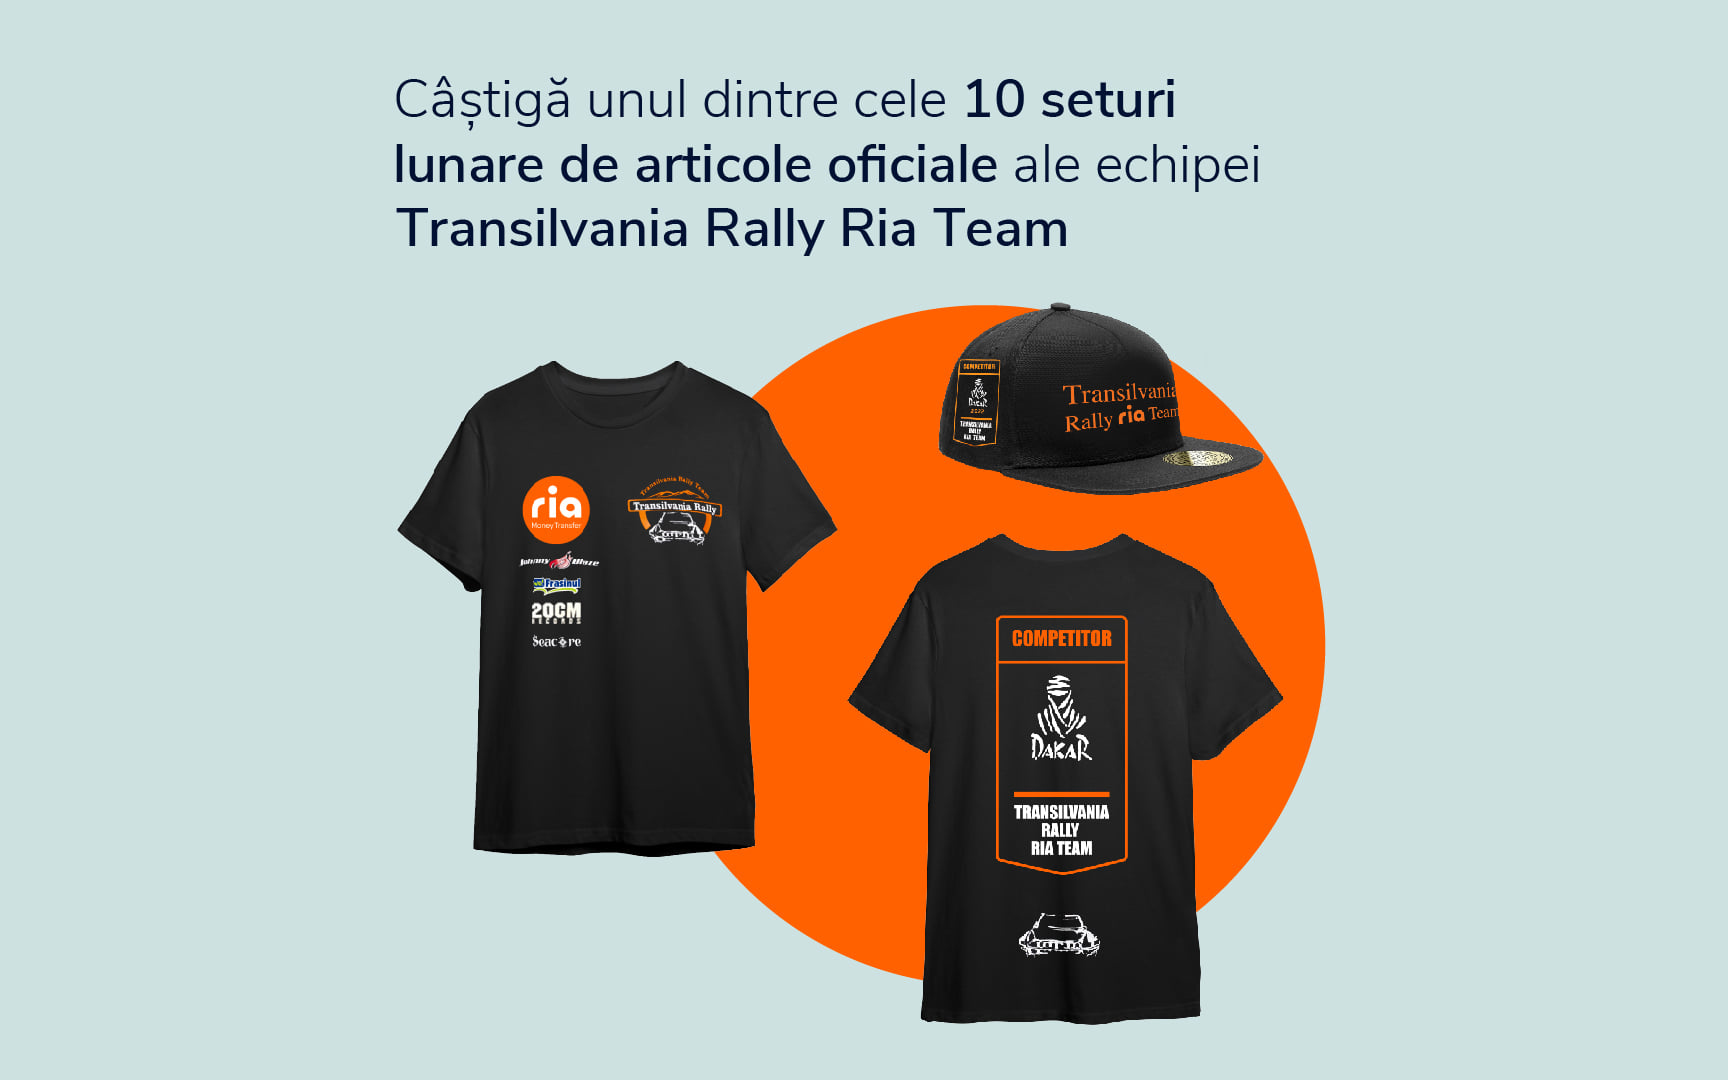 Transilvania Ria Rally Team